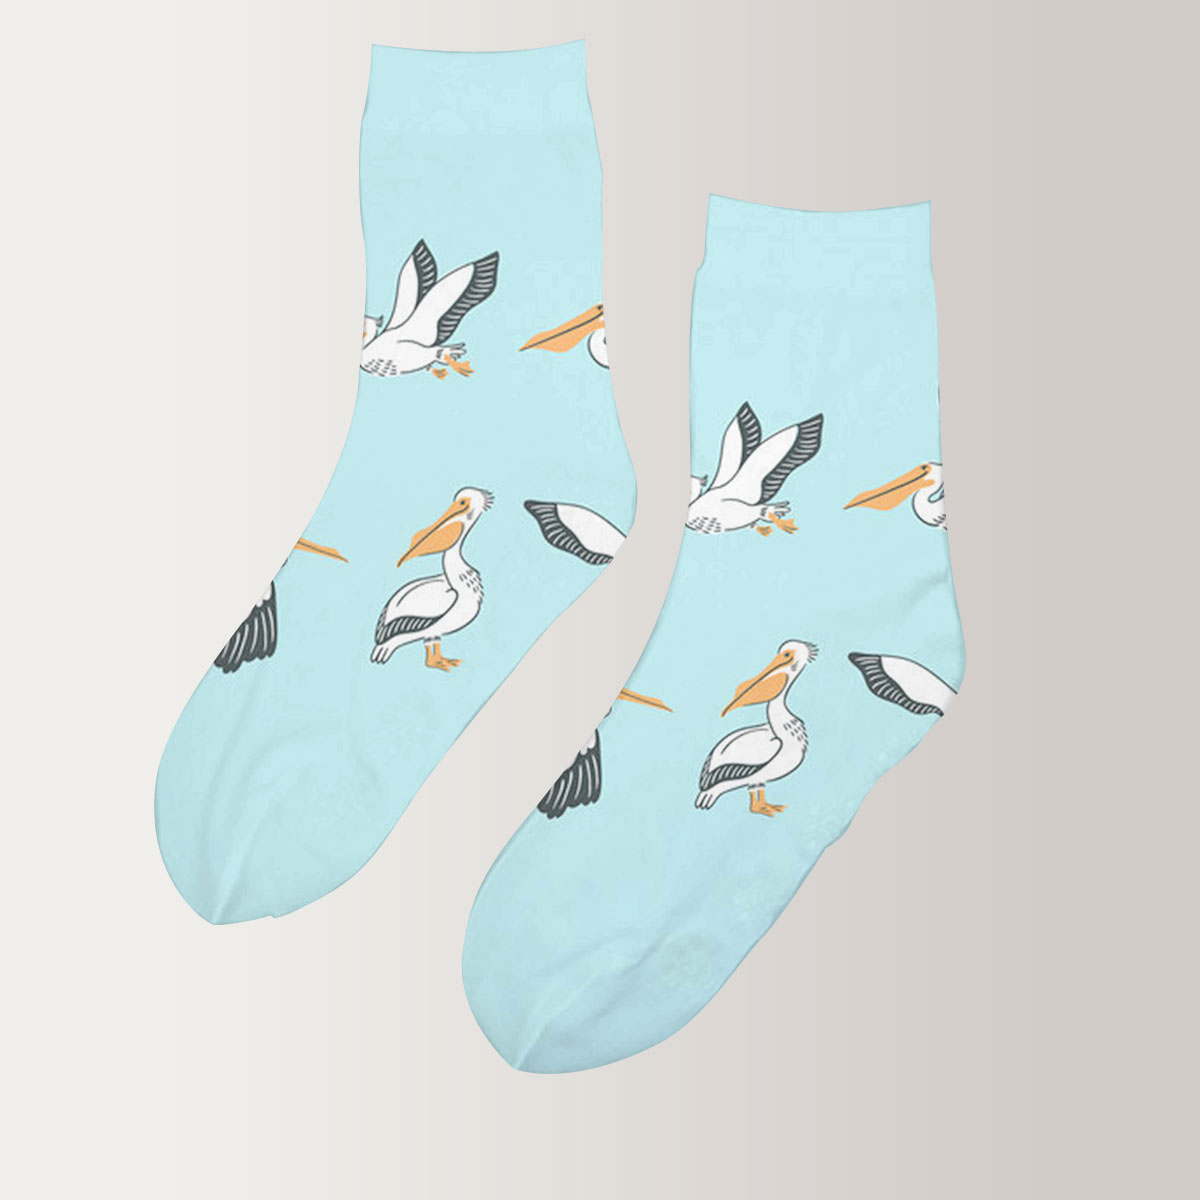 Positions Pelicans Coon 3D Socks